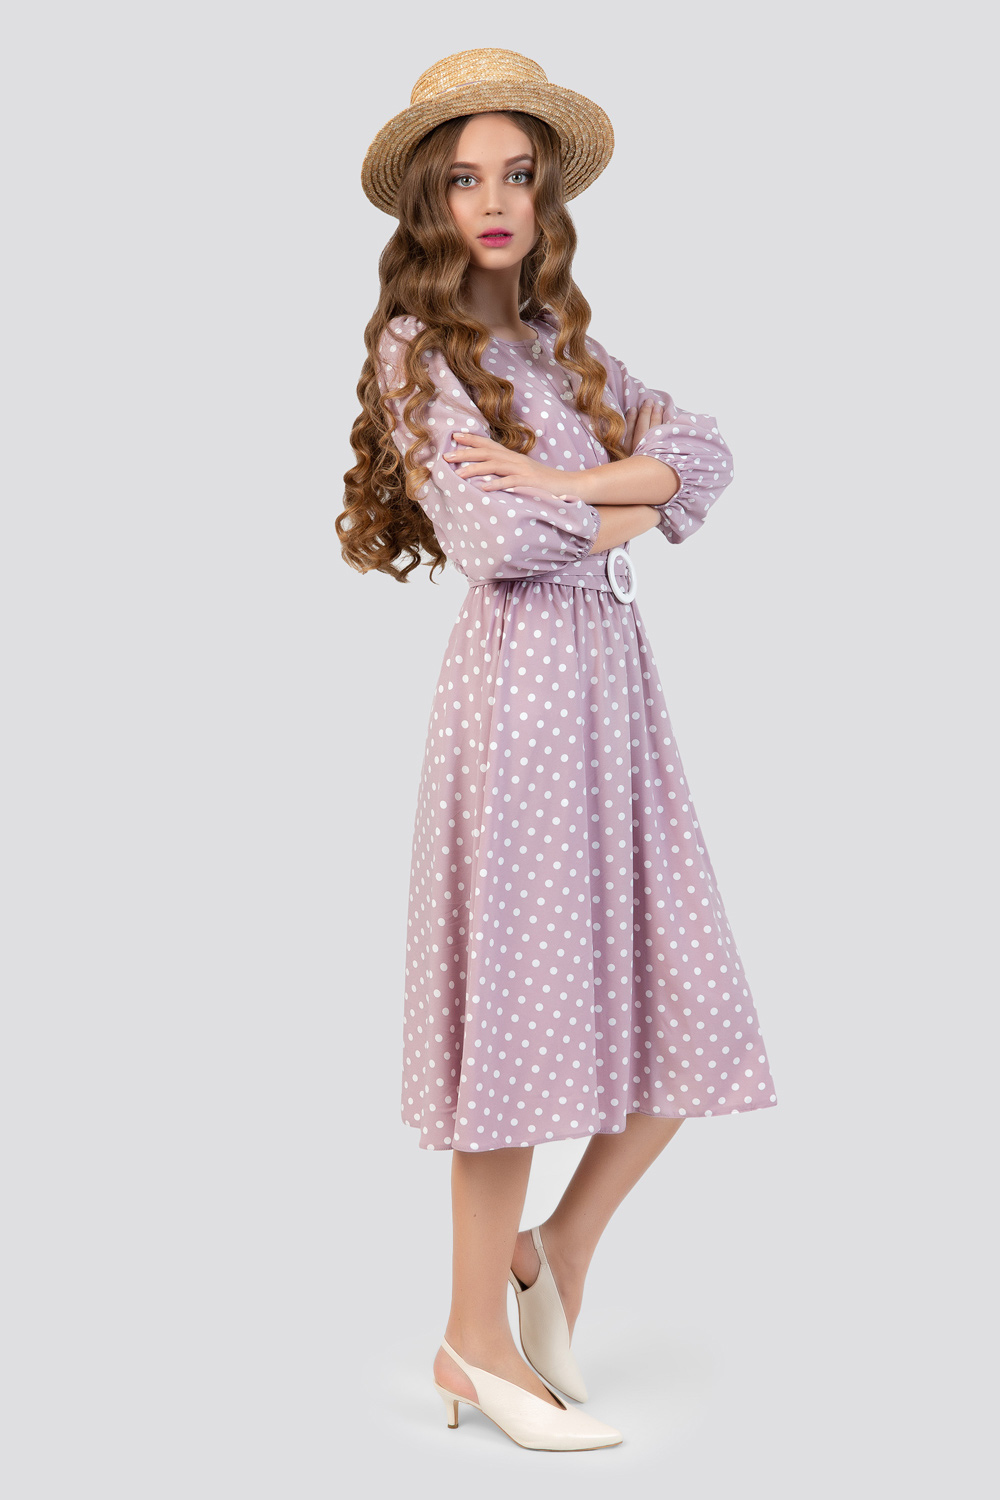 Polka dot dress with a belt